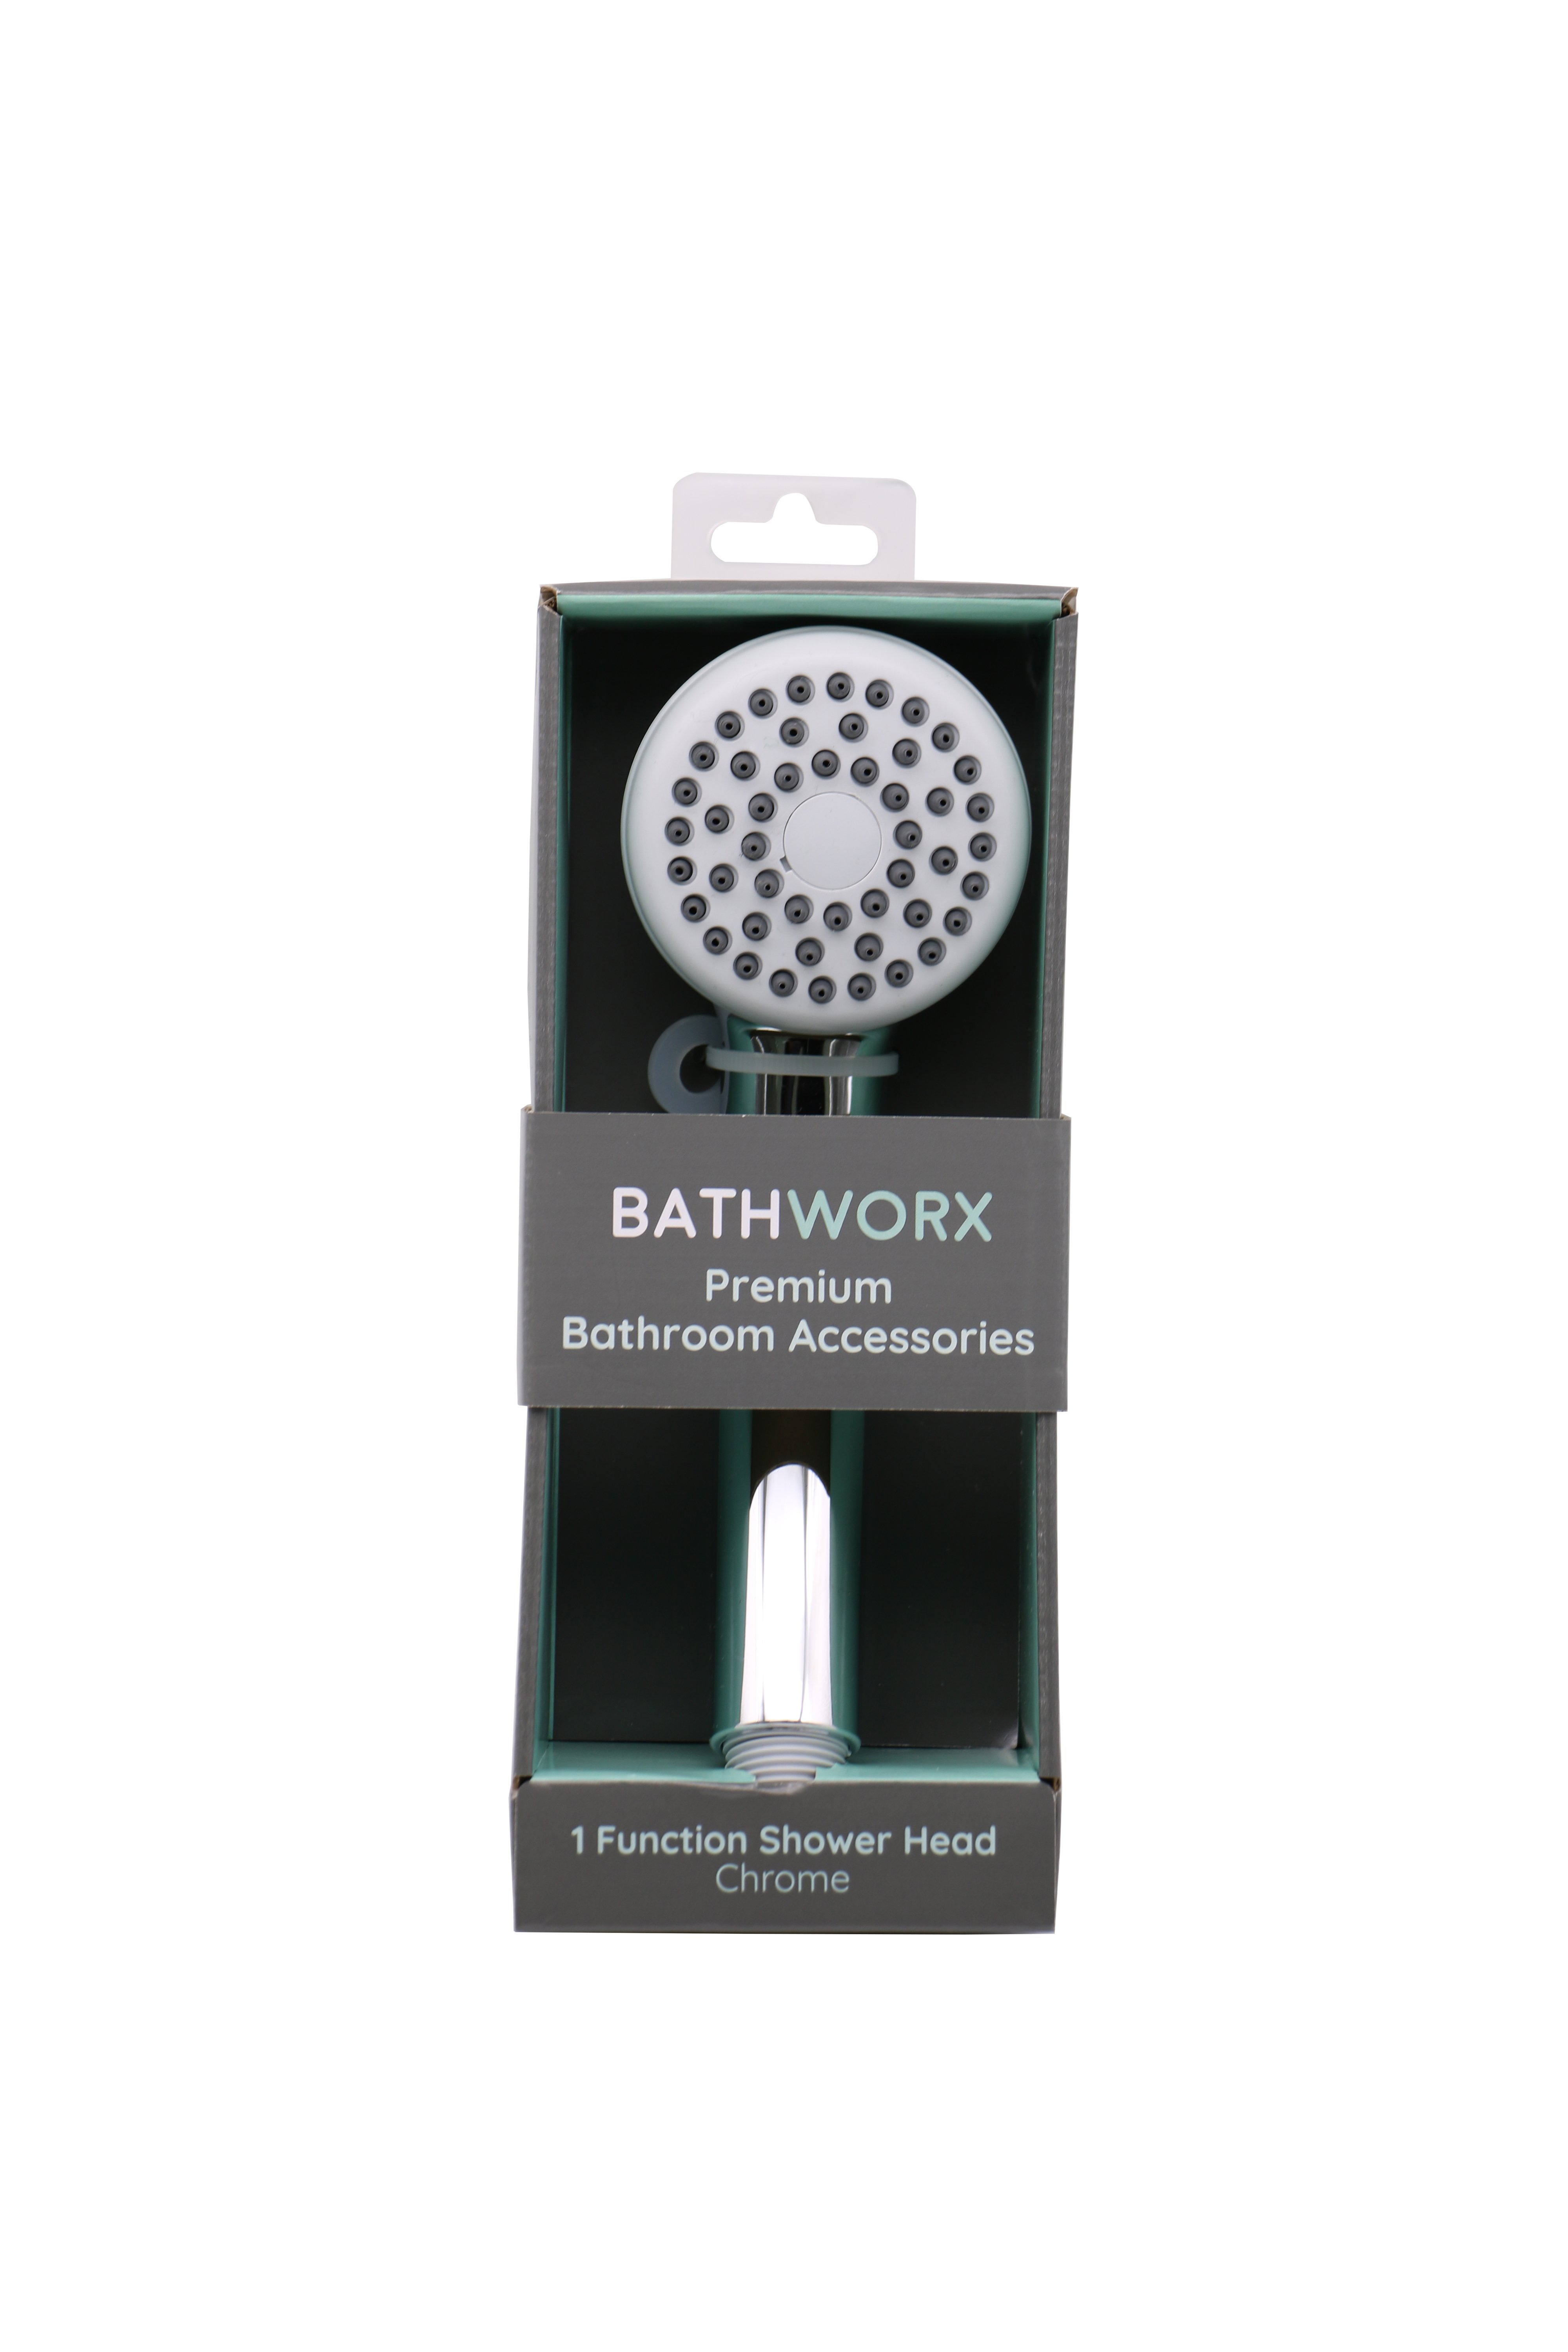 Bathworx 1 Function Shower Head (Chrome)